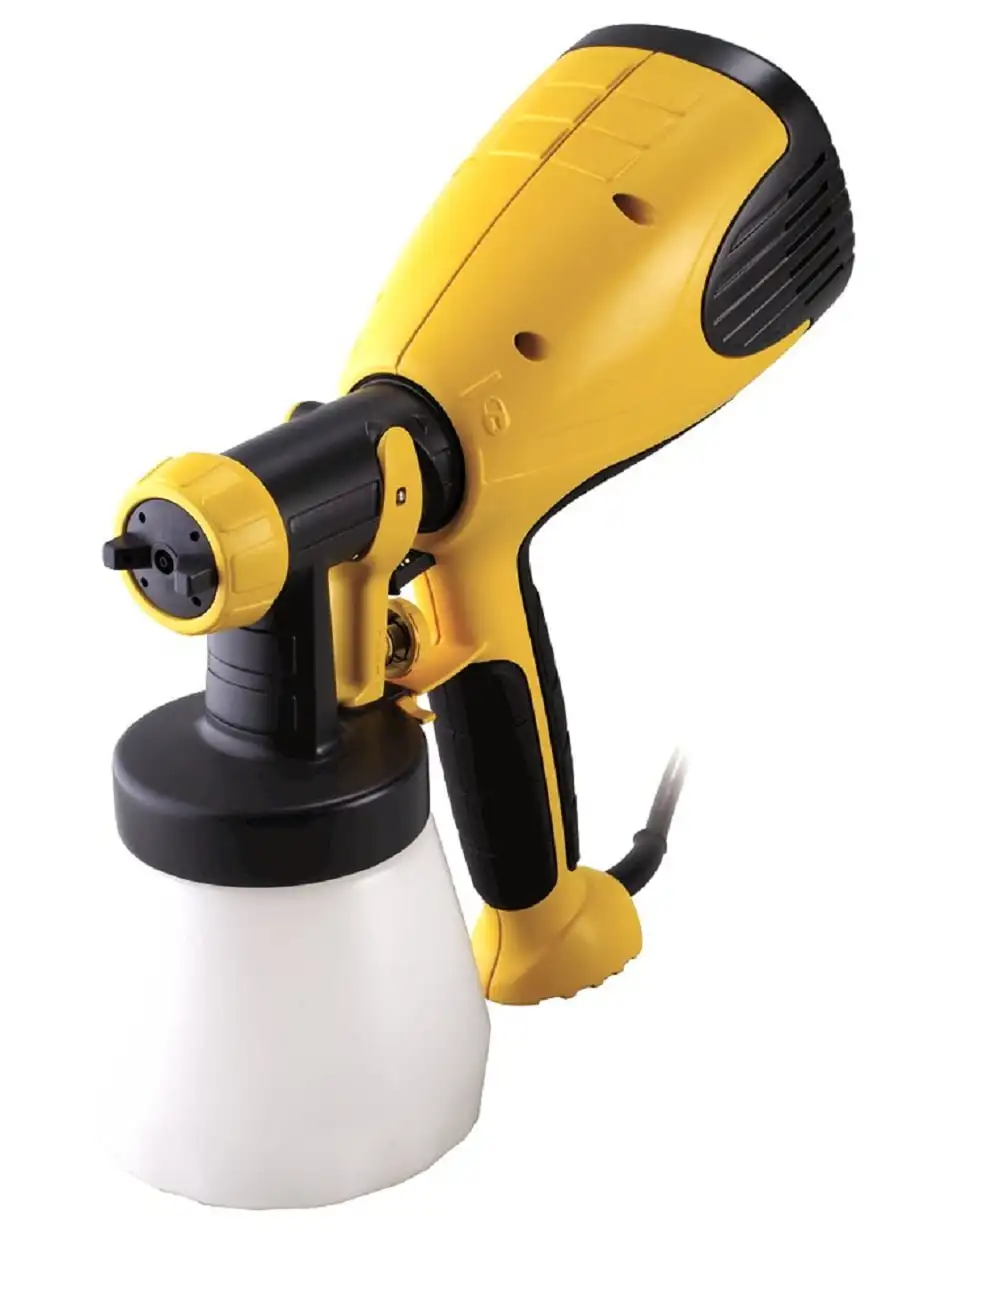 

Wagner 0417005D Control Spray Power Stain Sprayer Airless Paint Sprayer Airbrush Gun Air Brush Paint Cleaner Spray